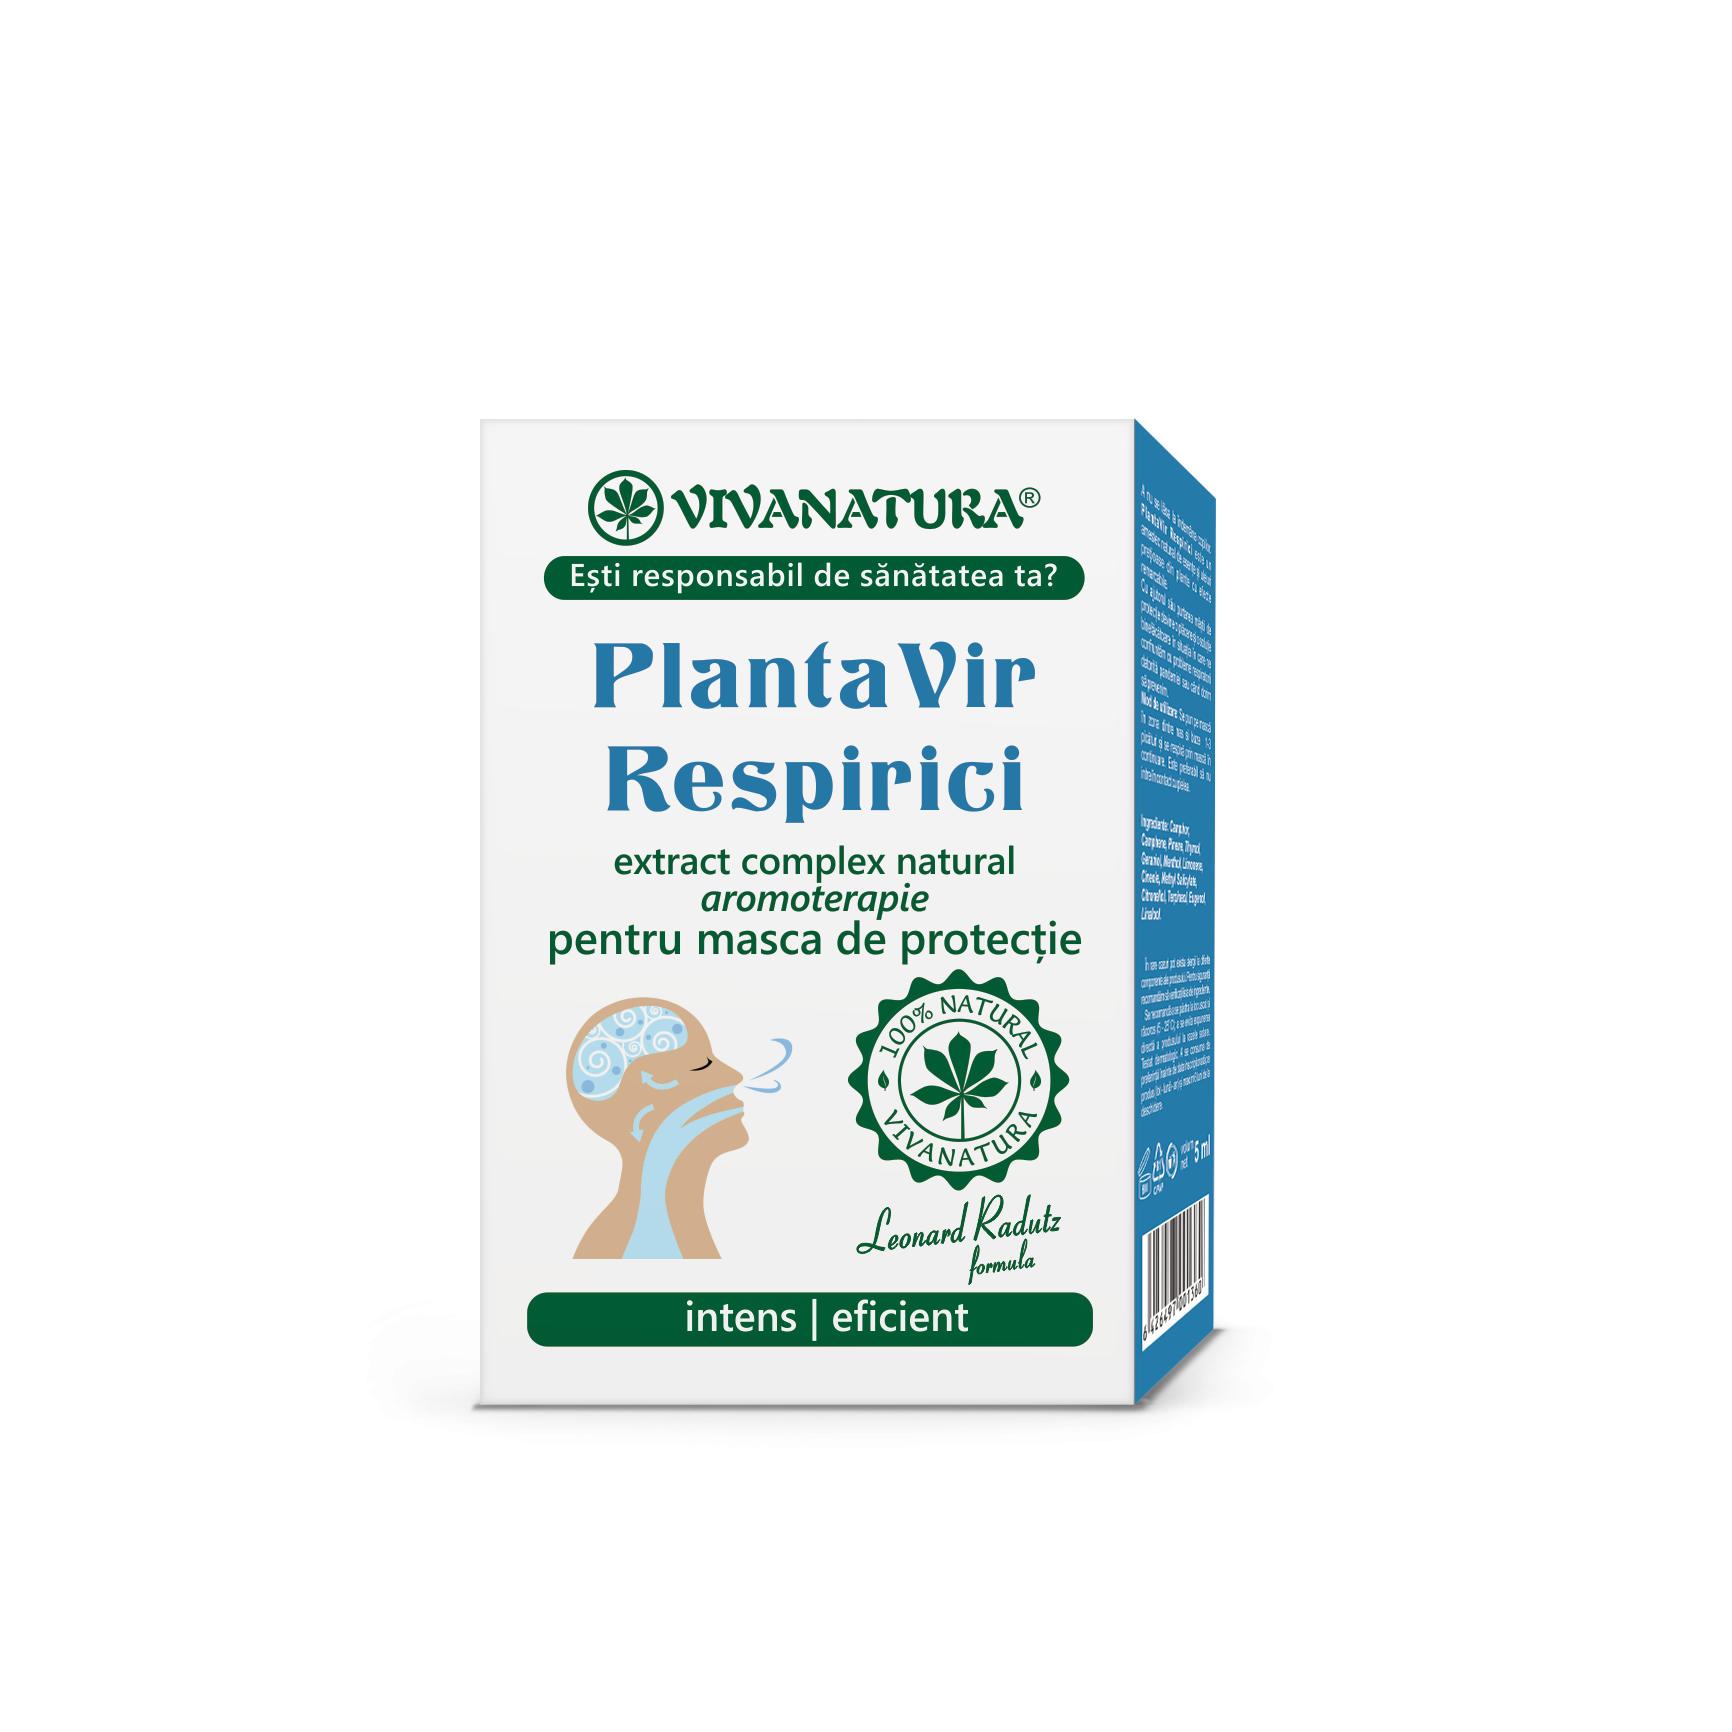 Plantavir respirici extract complex natural aromoterapie pentru masca de protectie, 5ml - vivanatura